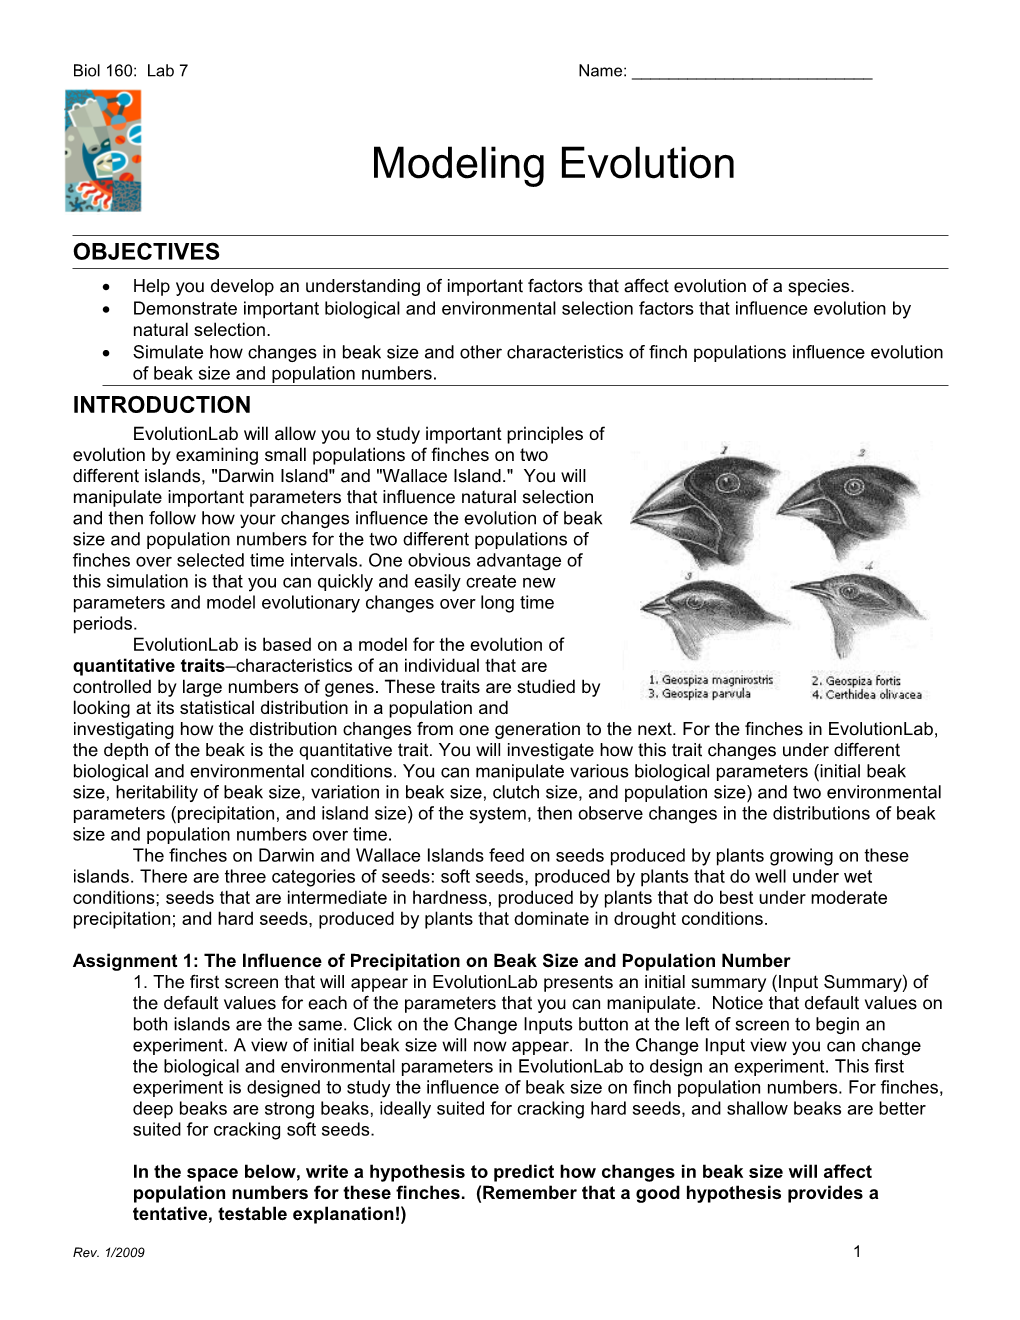 Modeling Evolution